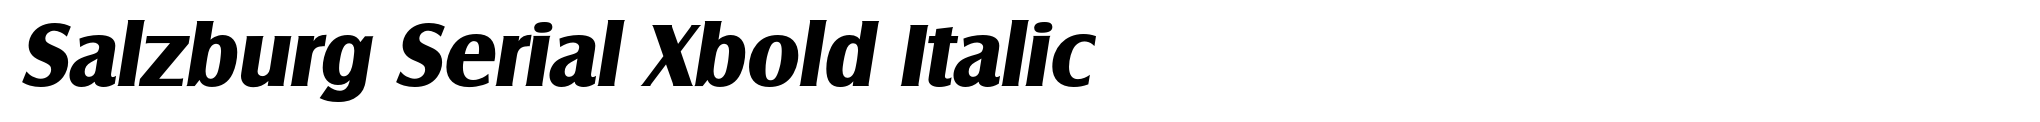 Salzburg Serial Xbold Italic image